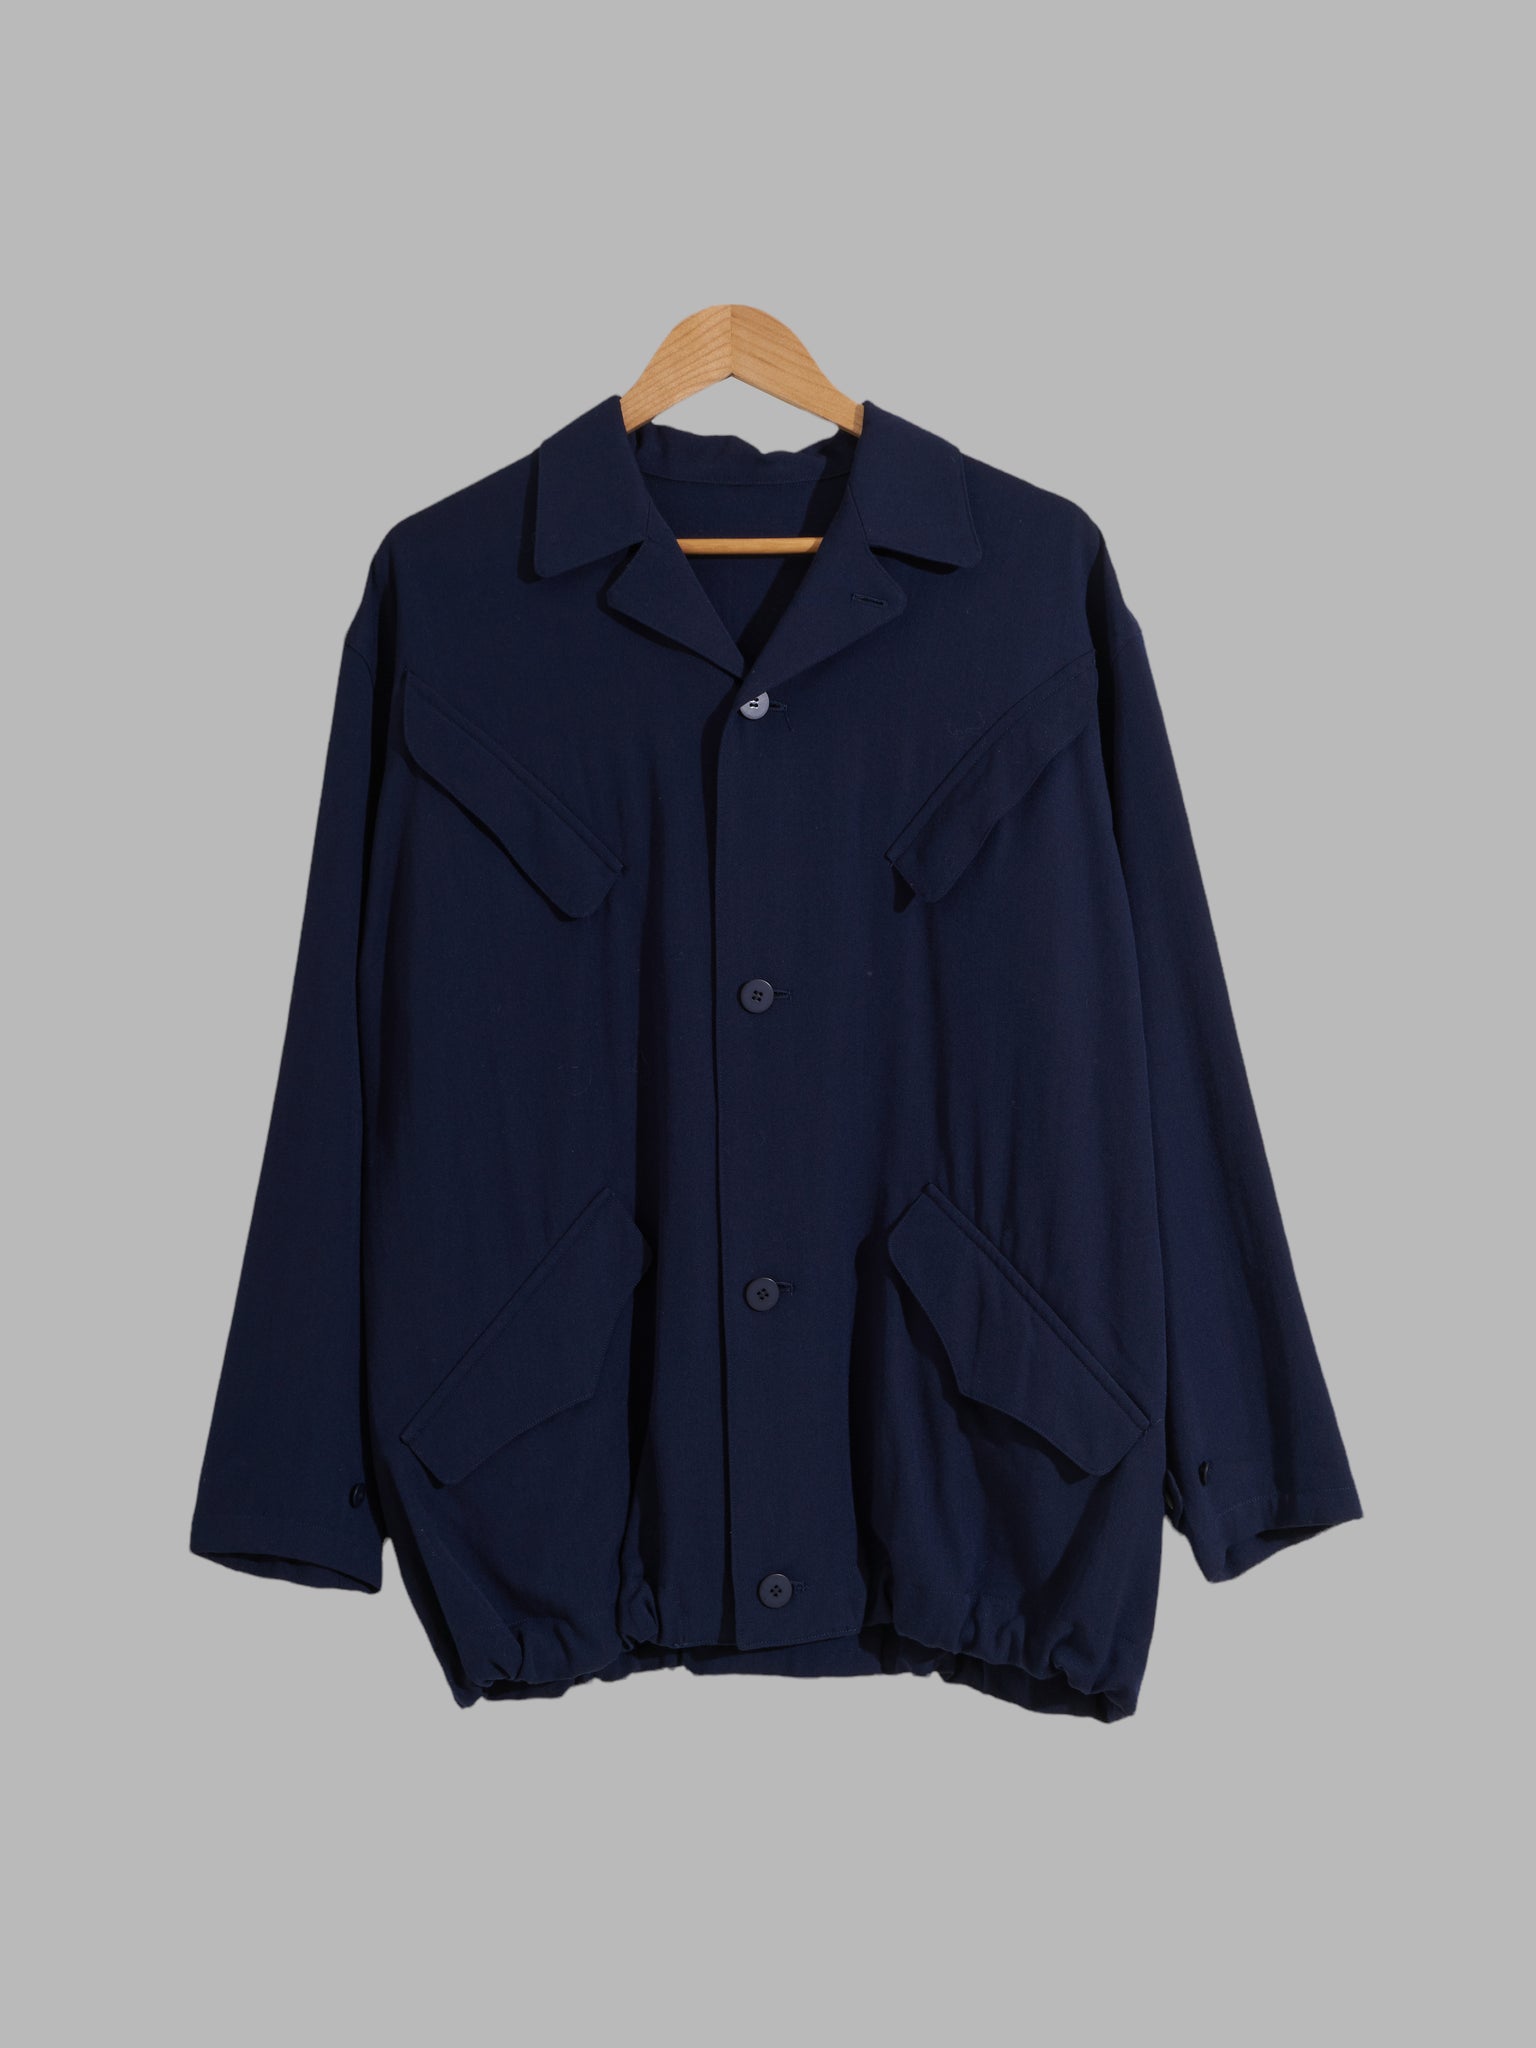 Y’s Yohji Yamamoto 1980s dark navy wool gabardine four pocket jacket